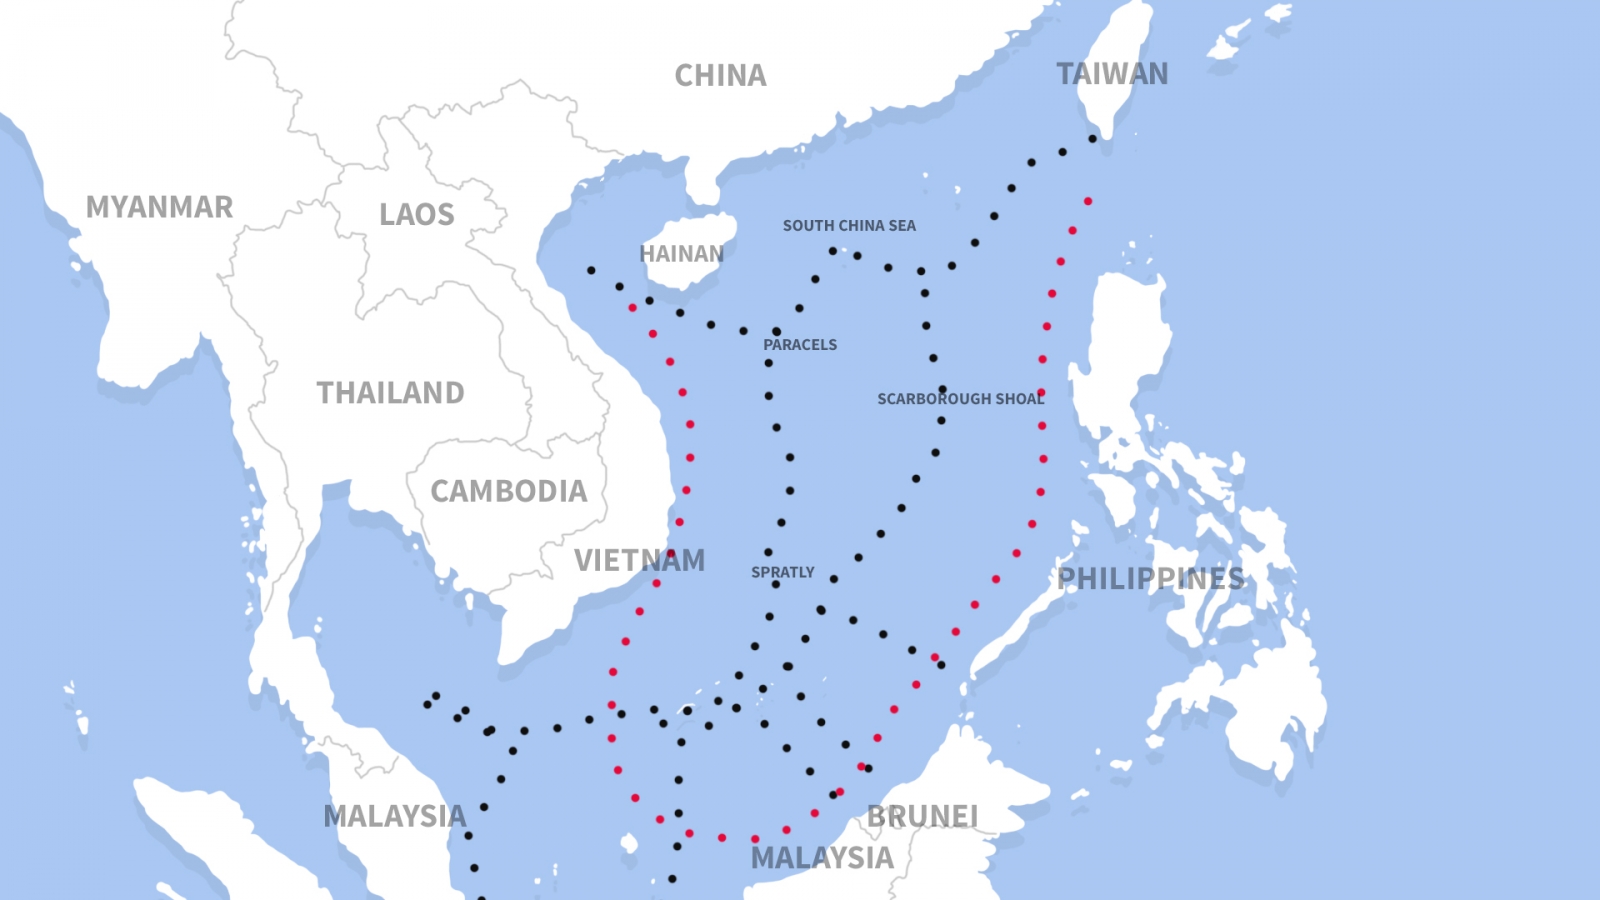 Где южно китайское море. Архипелаг Спратли на карте. Territorial disputes in the South China Sea. Моря Китая на карте. Китай Южно китайское море.